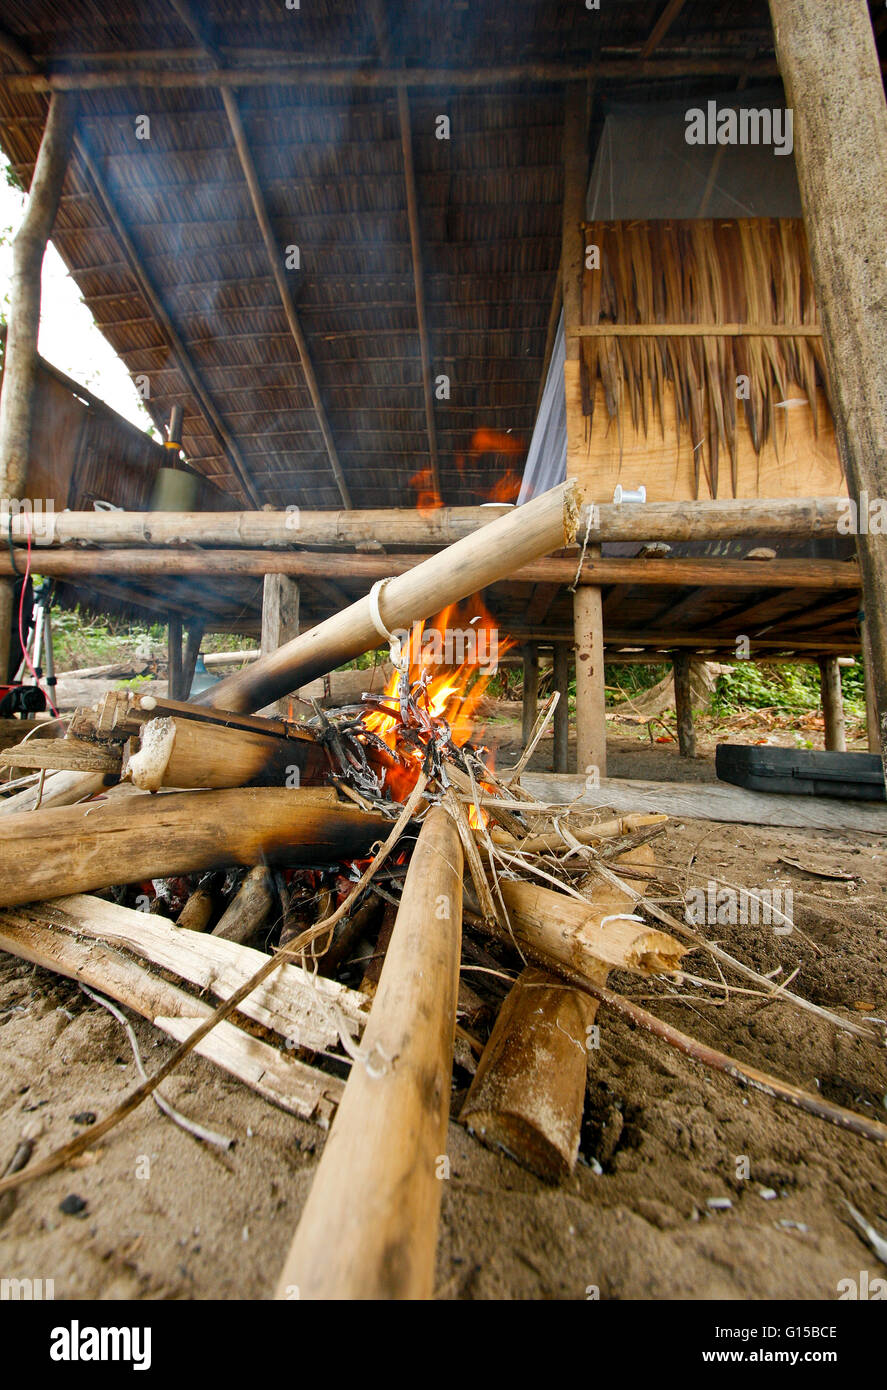 Wood fire. Inhabited island. Indonesia Stock Photo